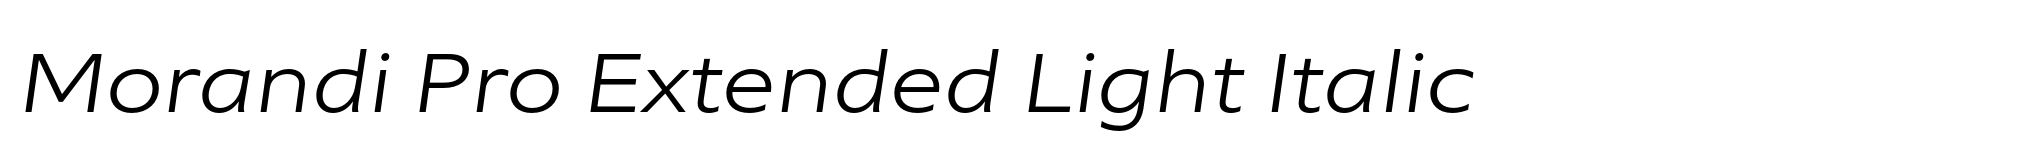 Morandi Pro Extended Light Italic image